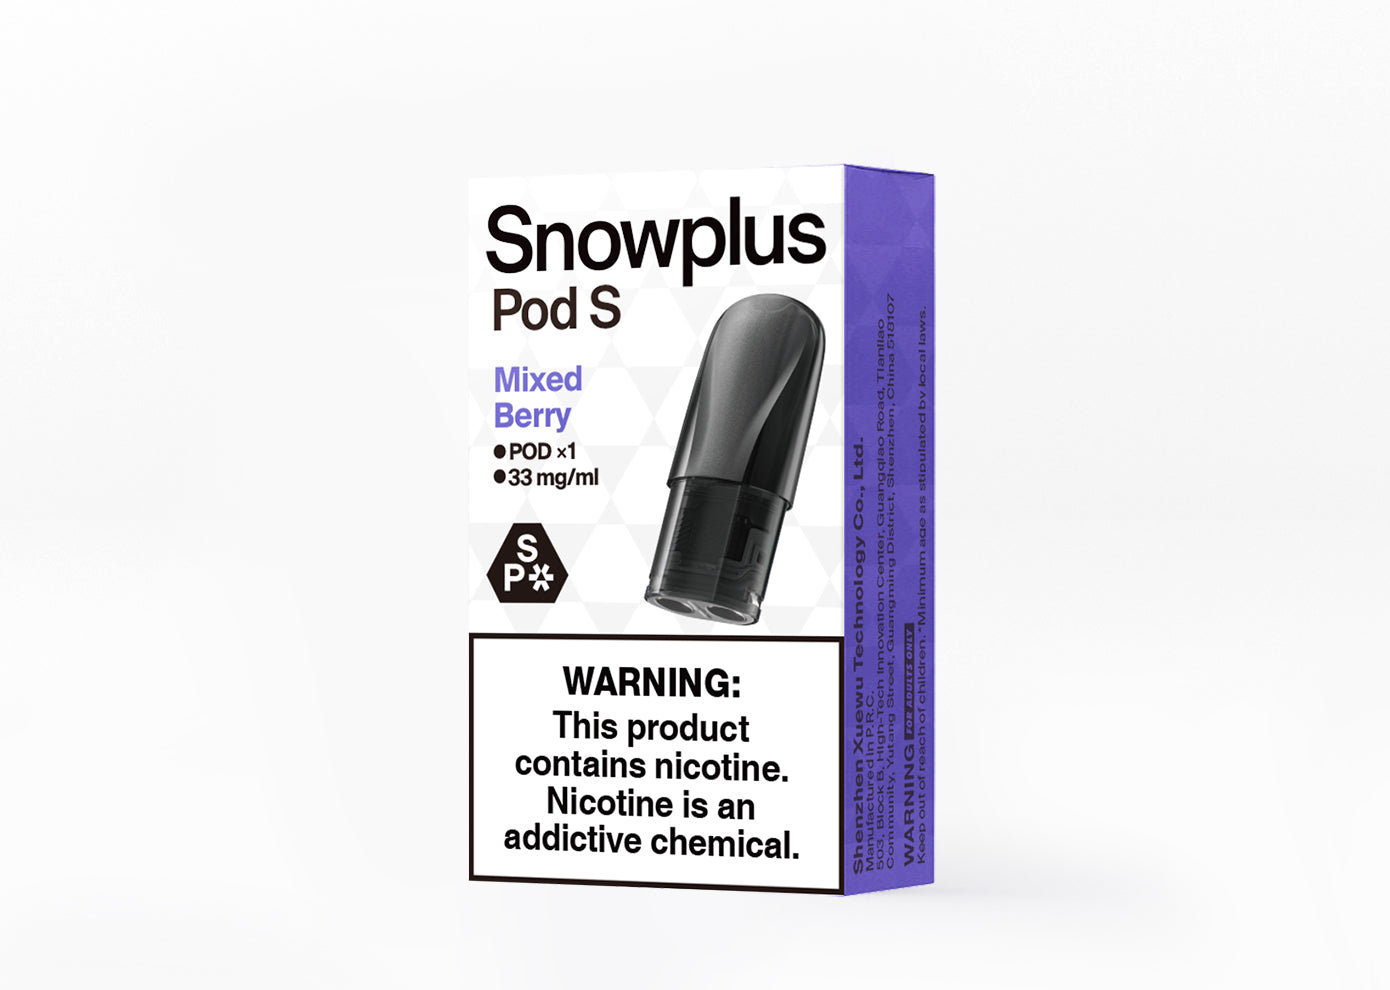 Snowplus Pods S